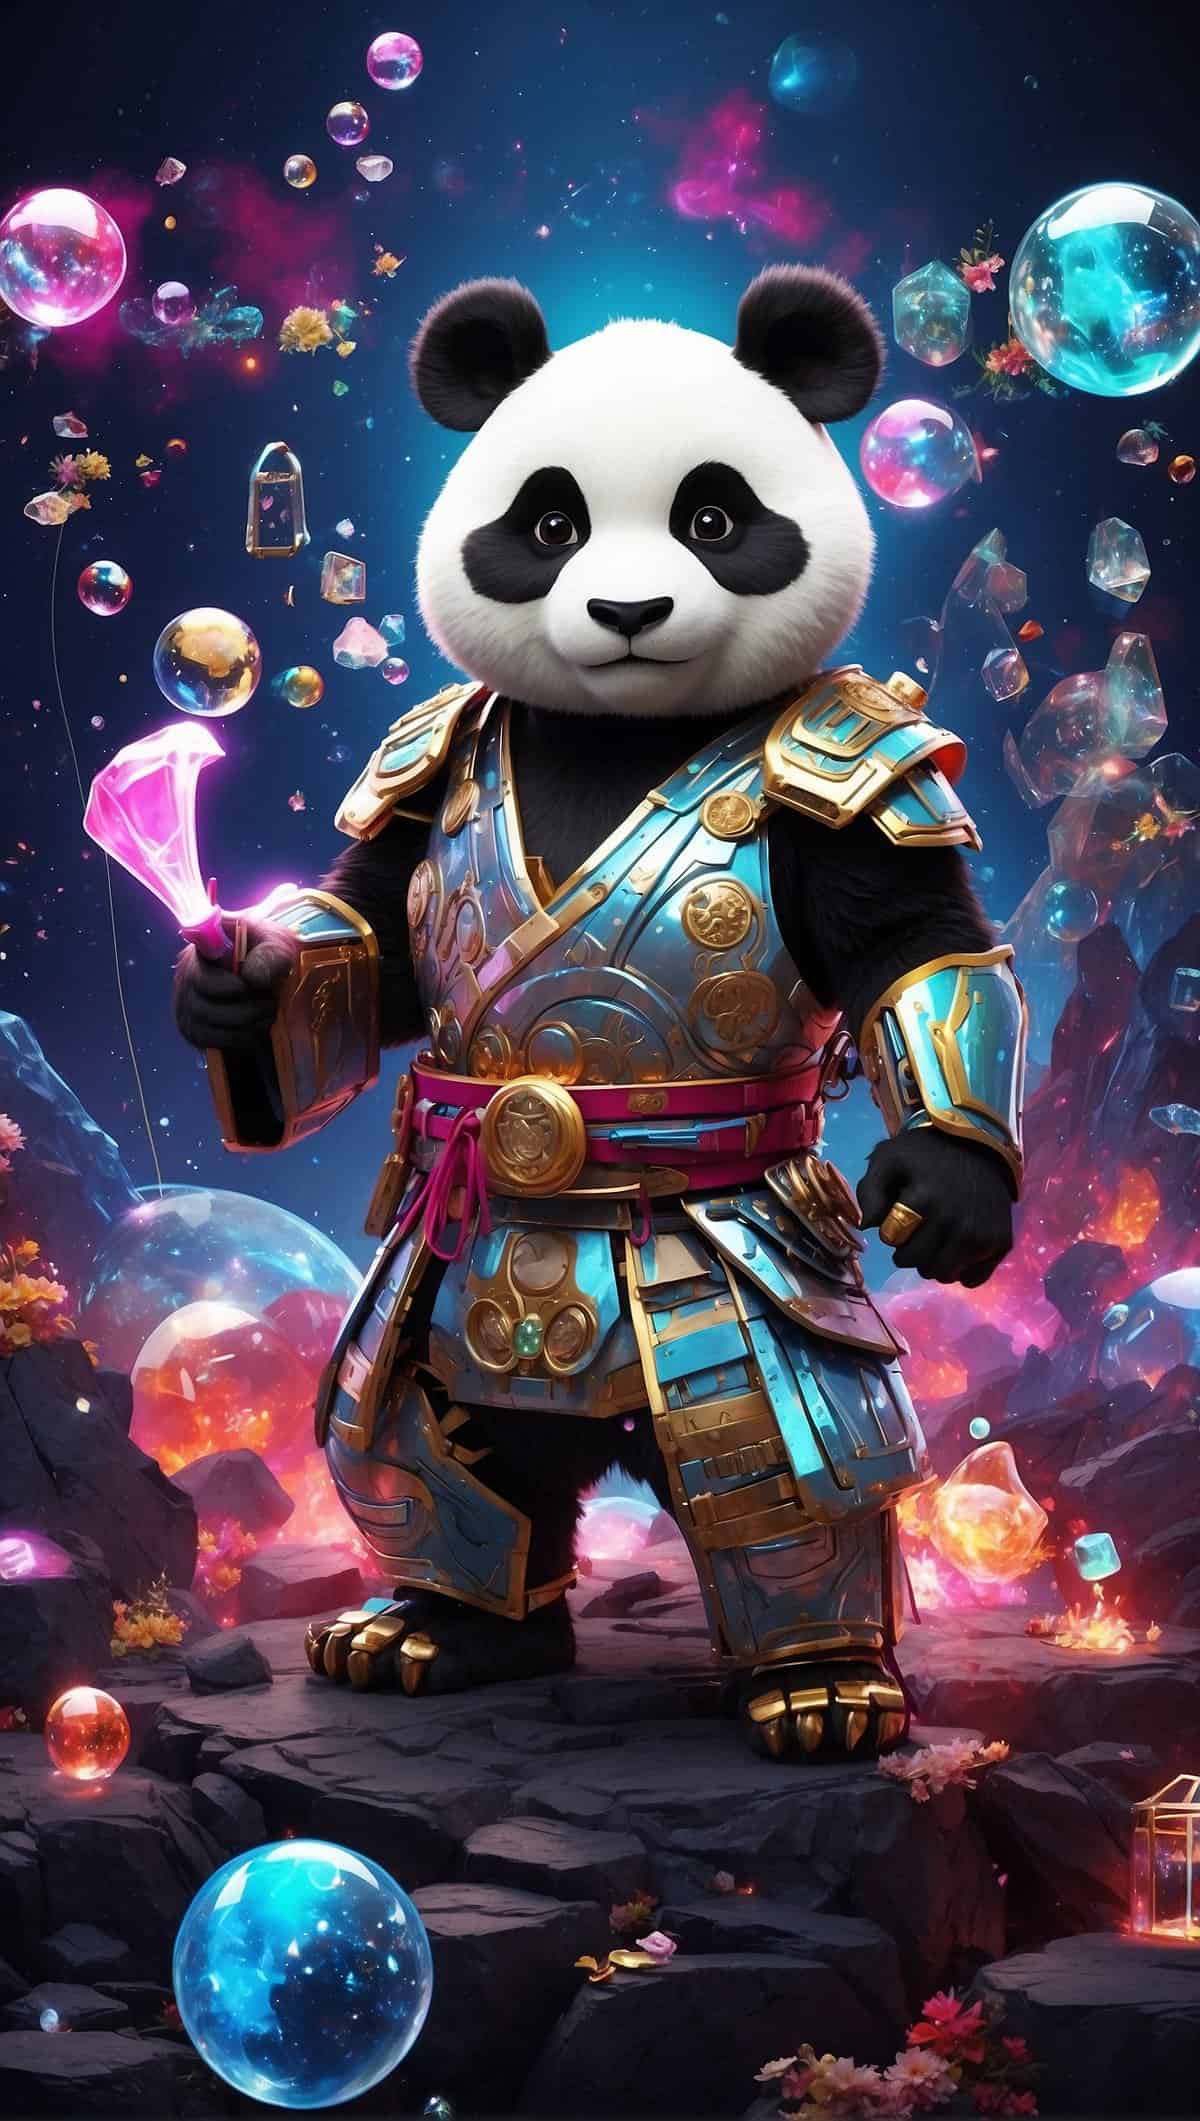 Samurai panda